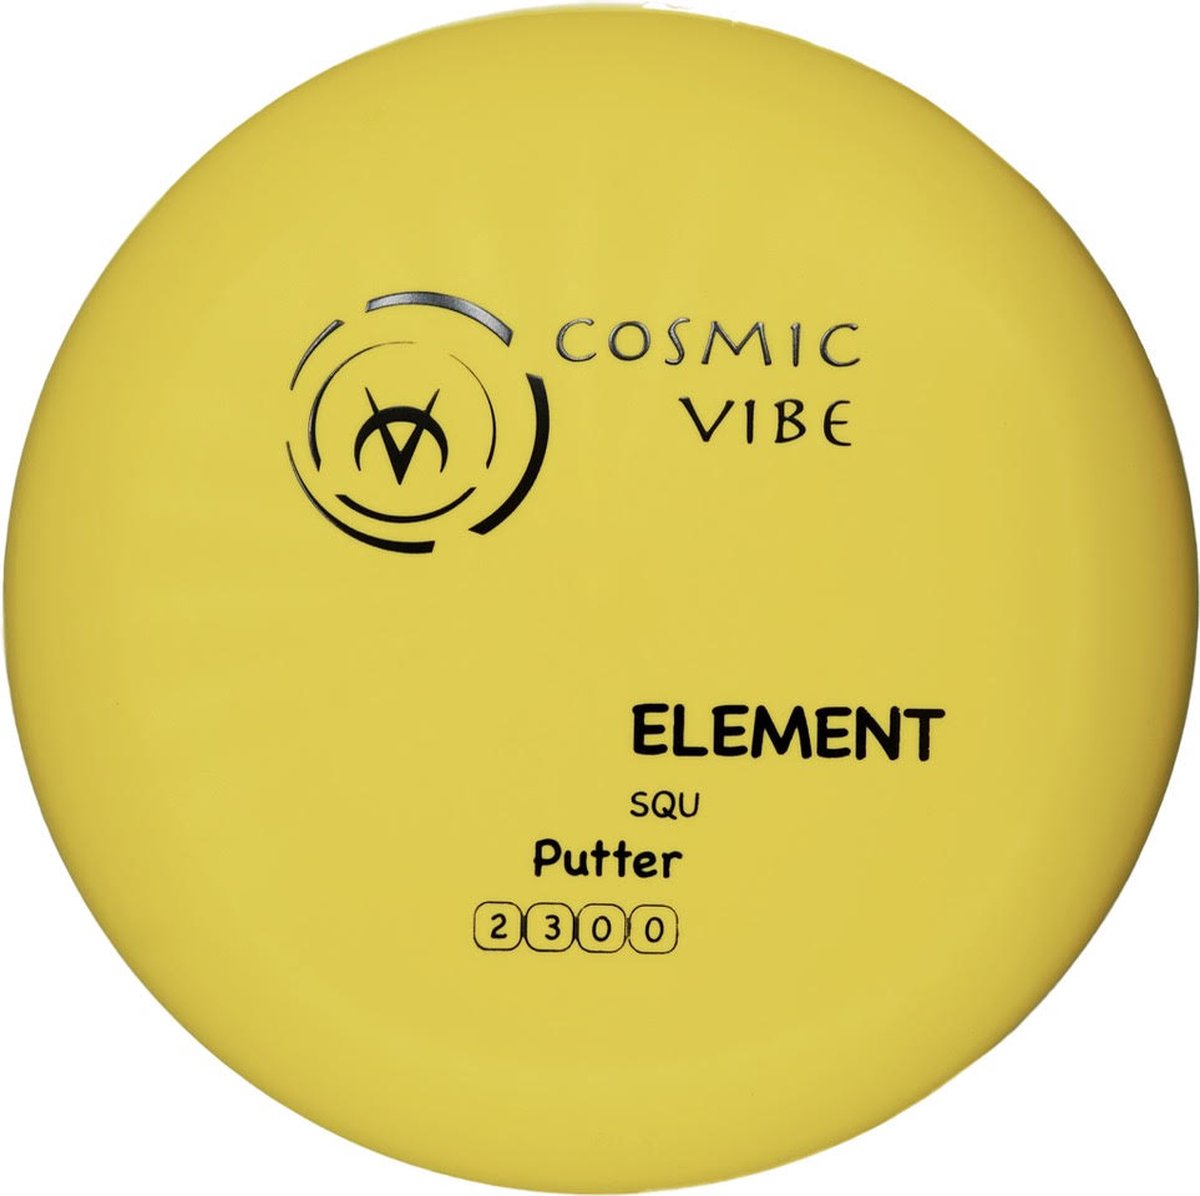 Discgolf Cosmic Vibe SQU Element - (2/3/0/0) - Putter - Frisbee - Yellow